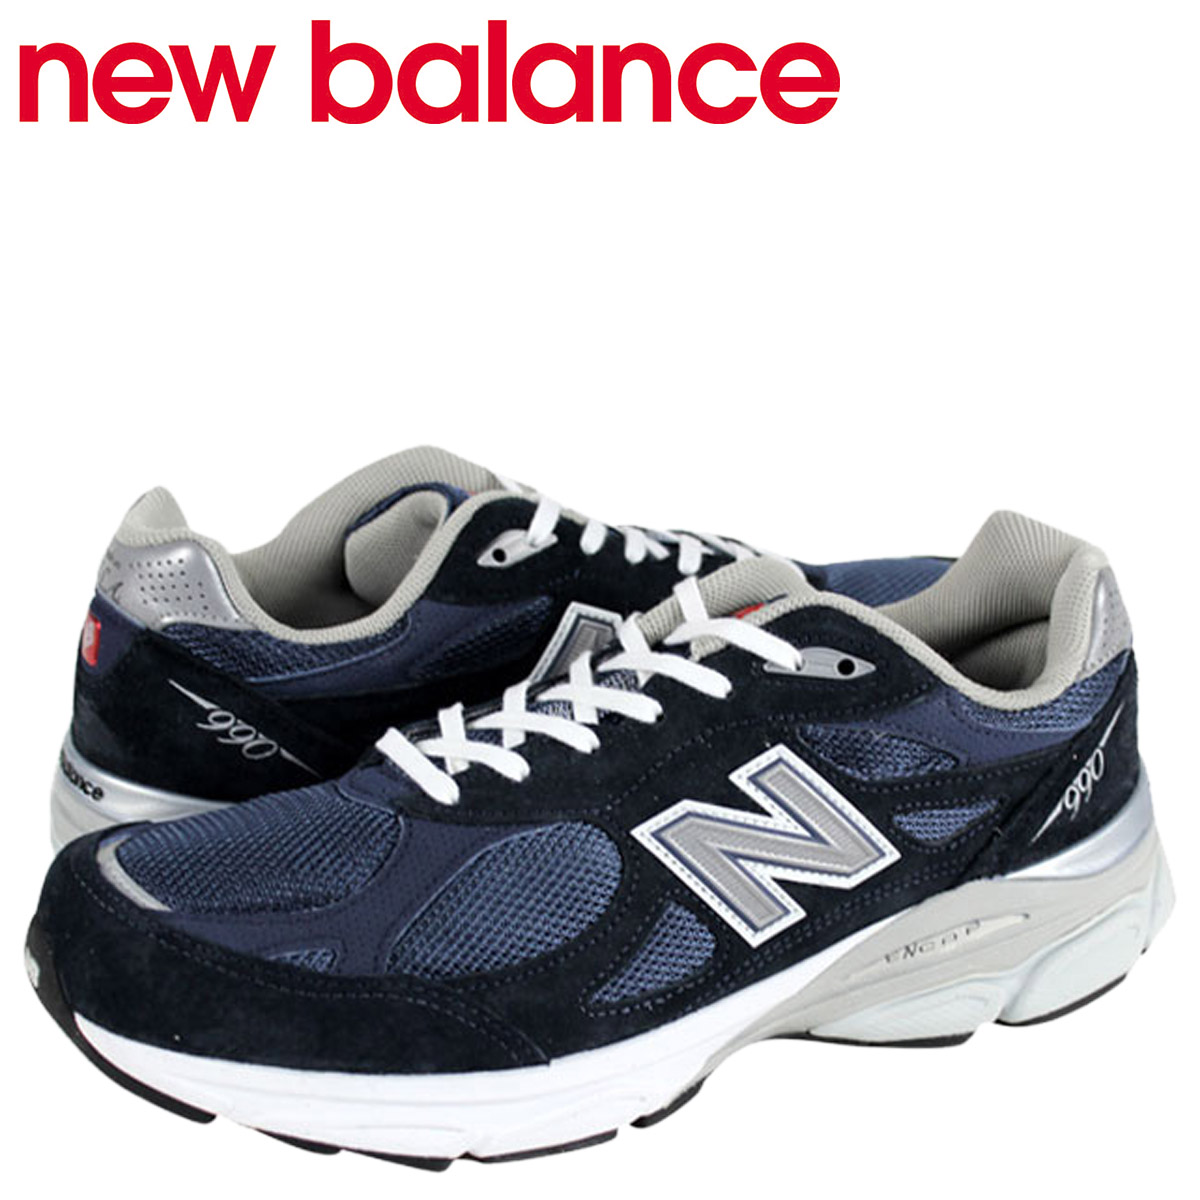 new balance usa mens shoes